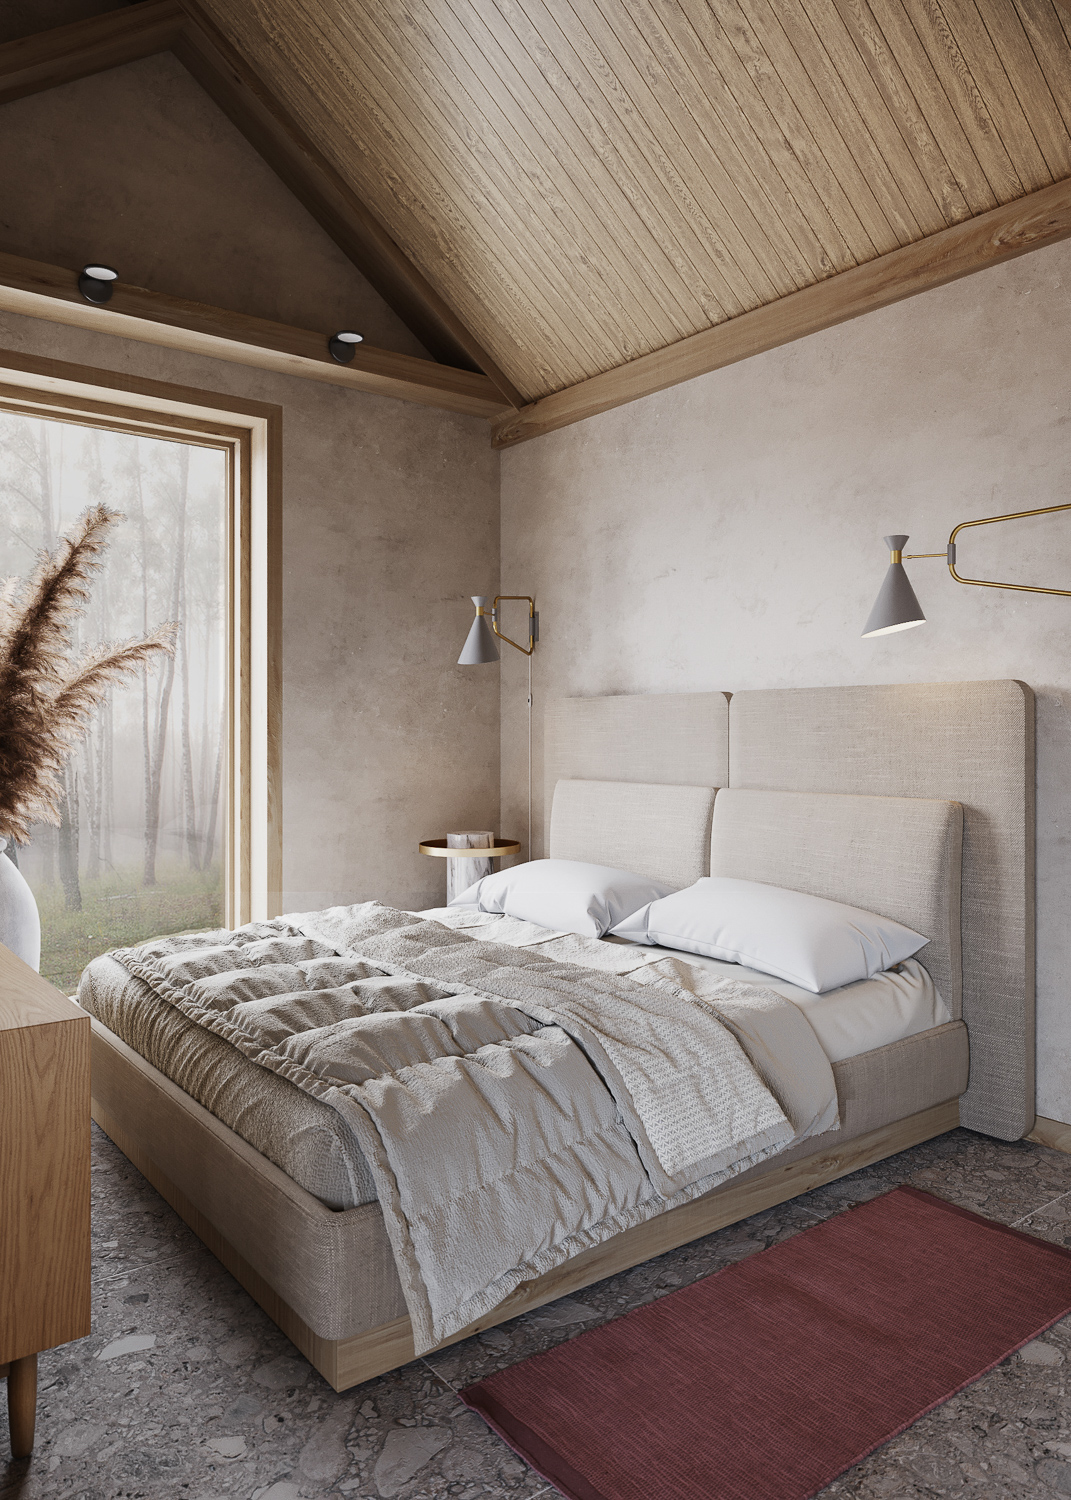 ilaria fatone _ house of silence _ 3D main bedroom